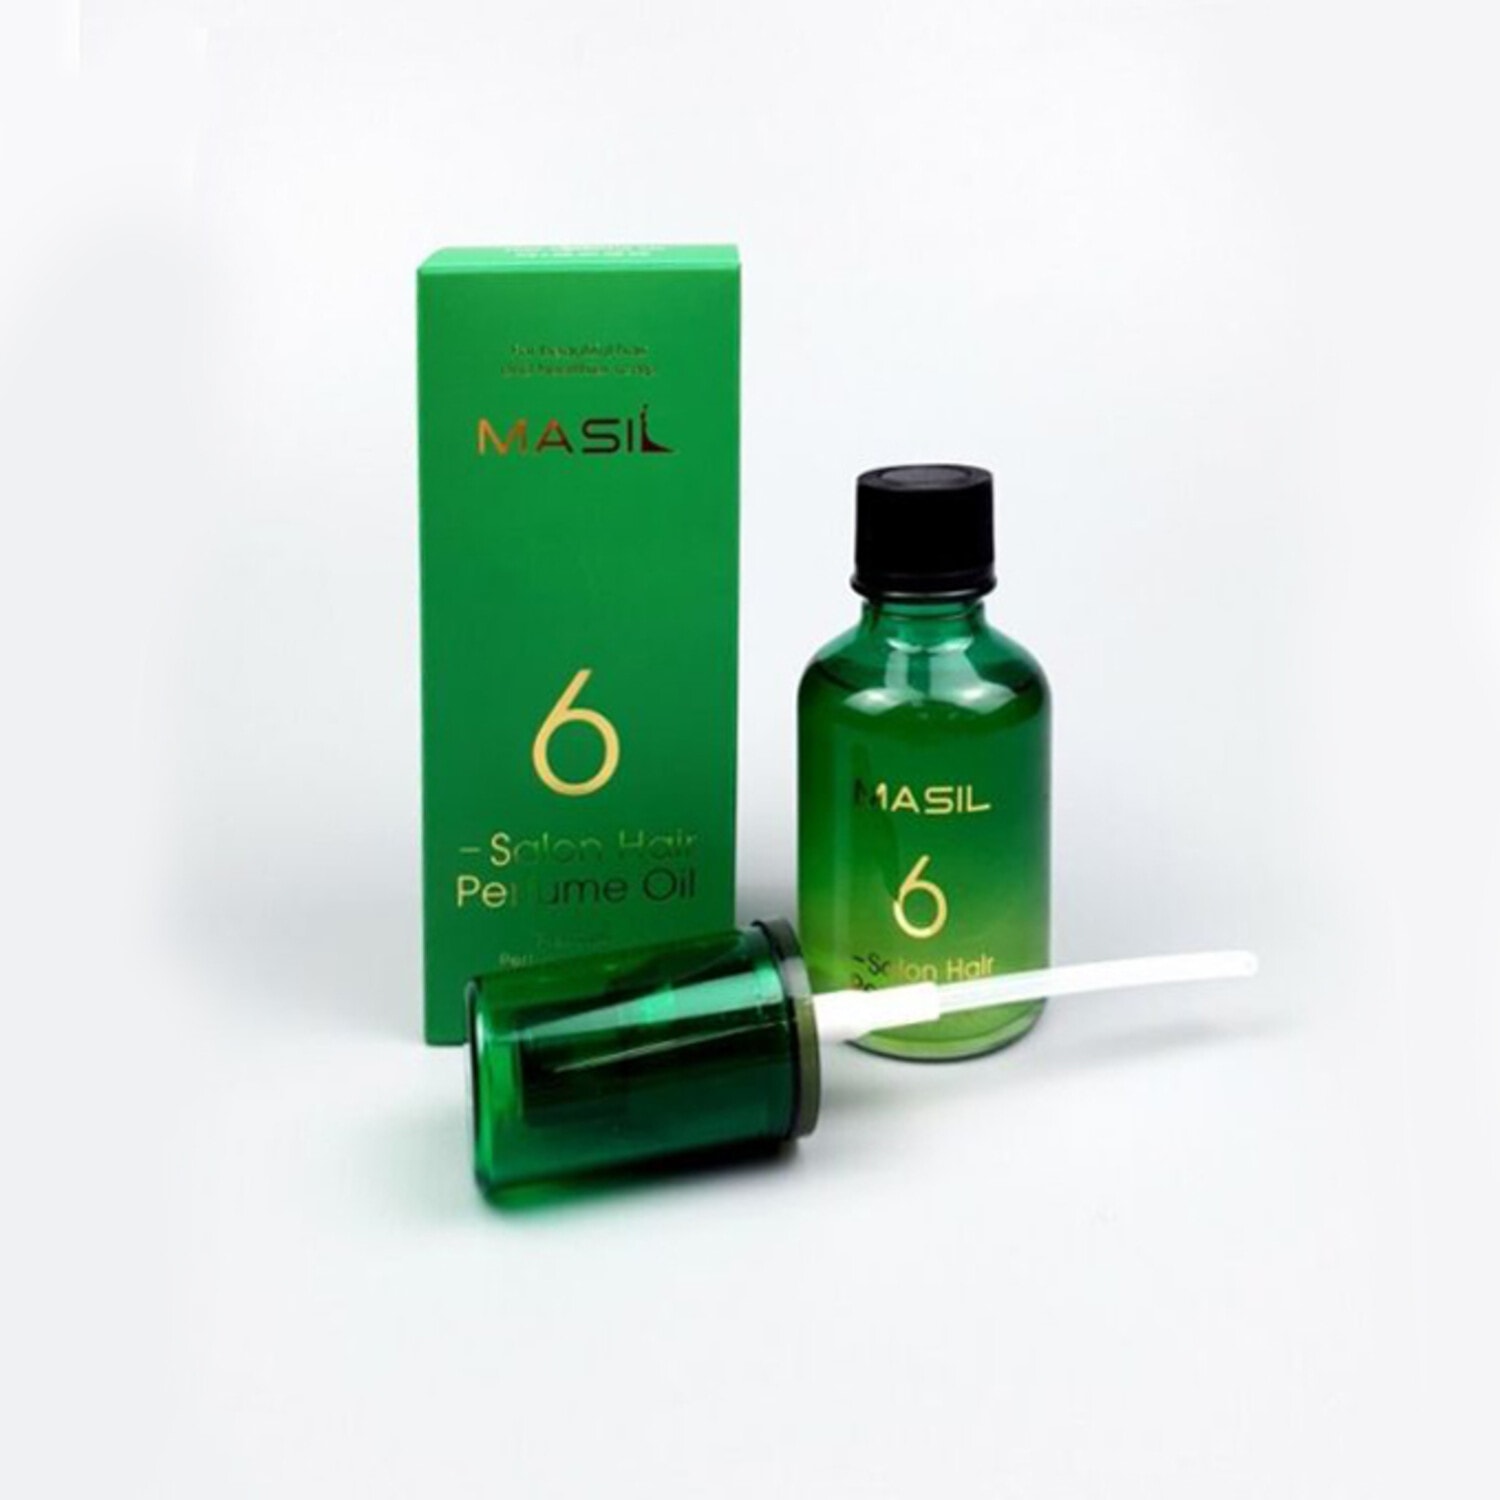 Masil 6 Salon Hair Perfume Oil Парфюмированное  масло для волос, 60мл. / 060064